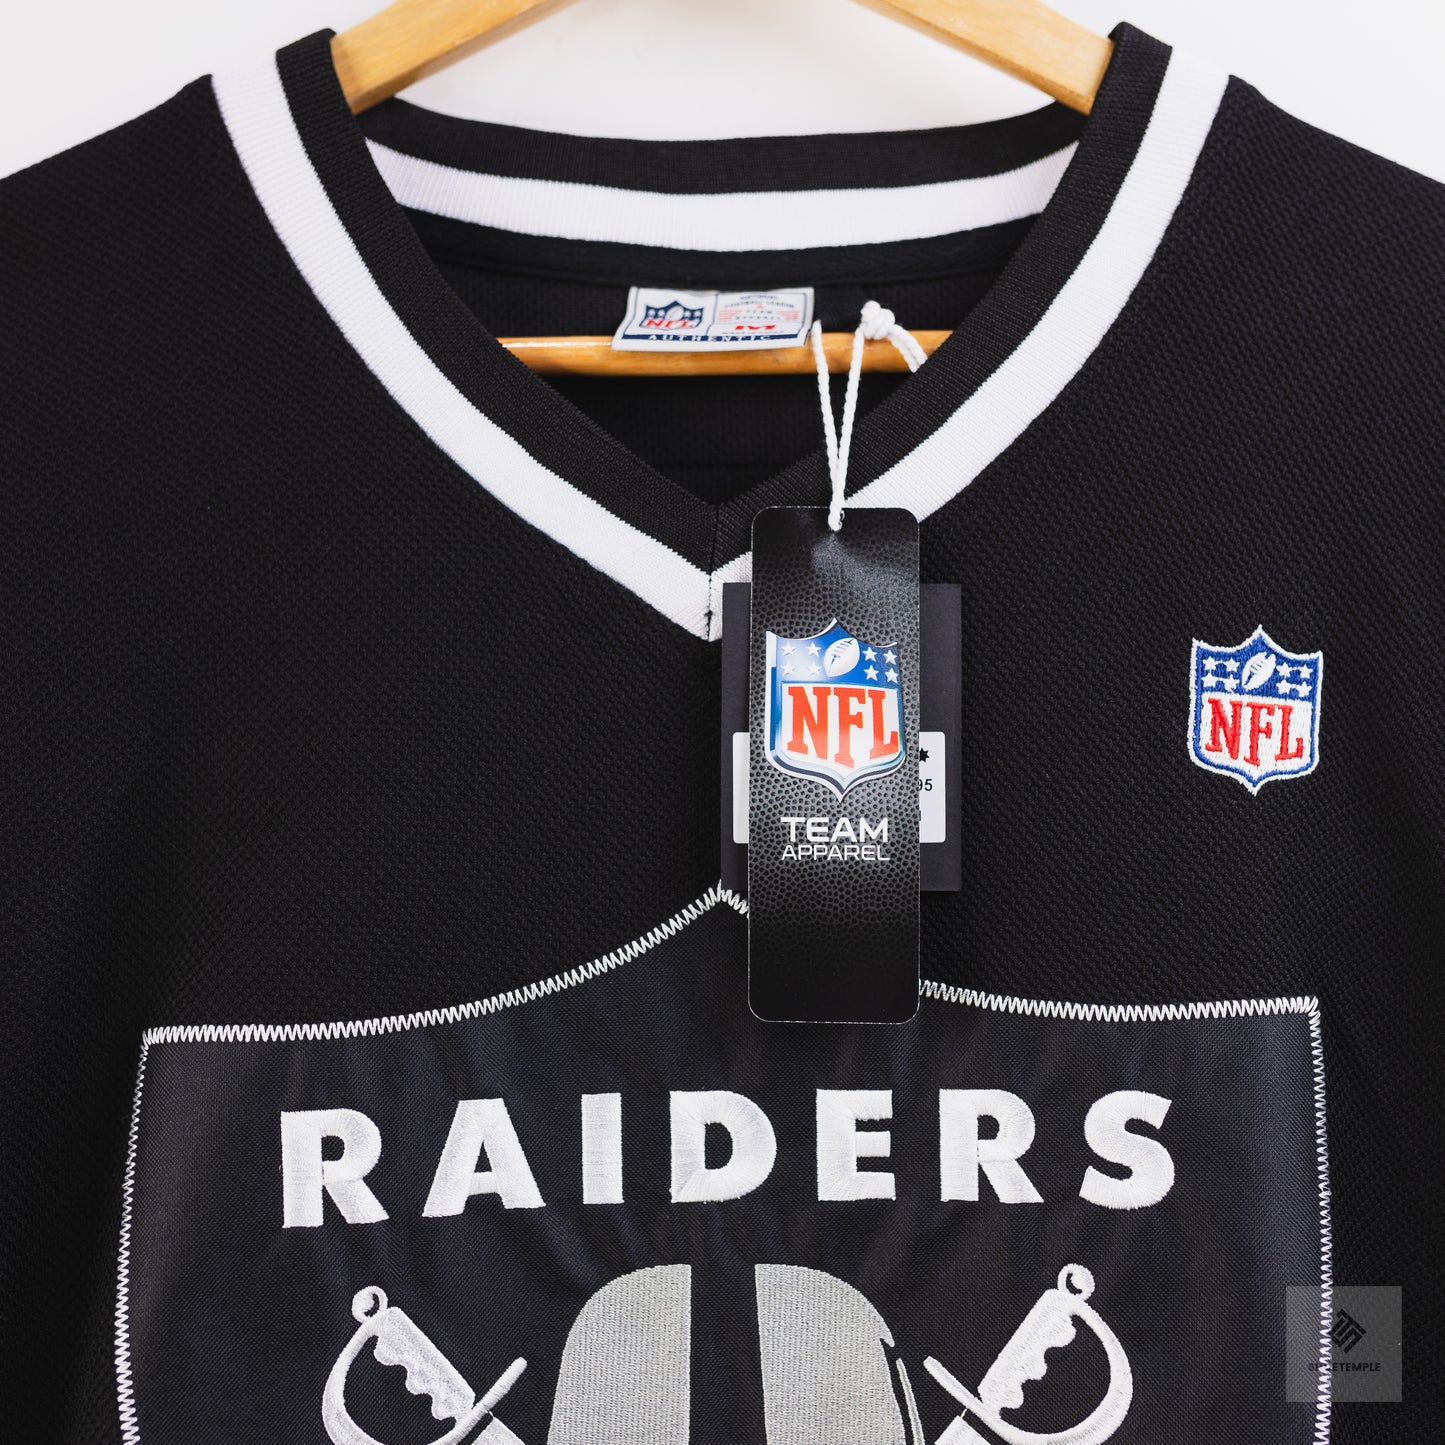 Long Sleeve V Neck Jersey - NFL Black Raiders - shield